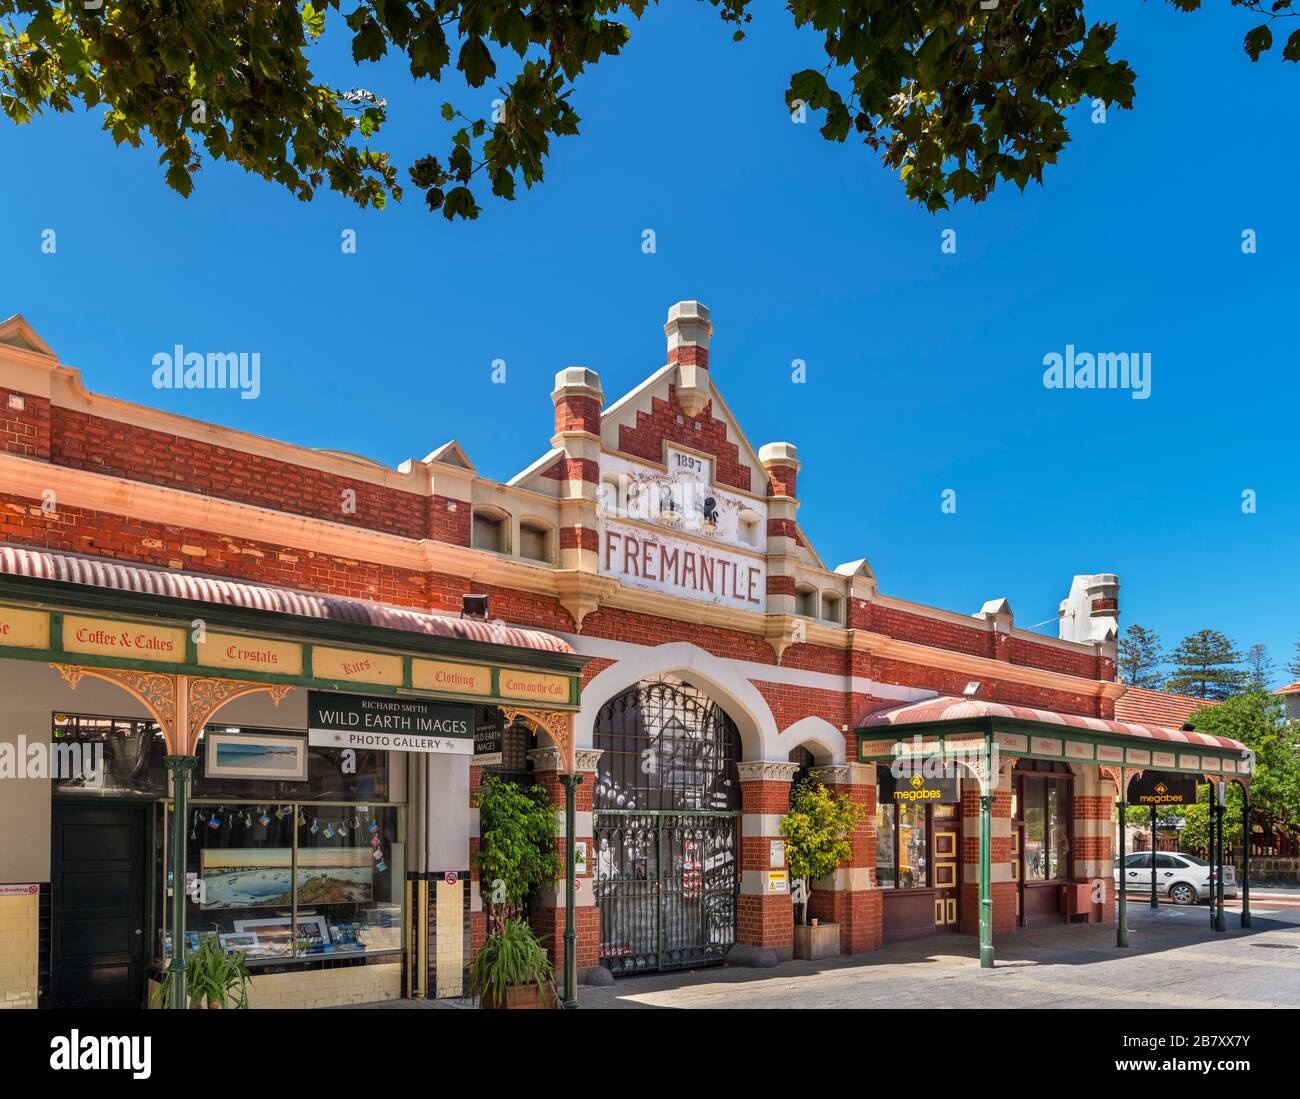 The historic Fremantle Markets building, Fremantle, Western Australia, Australia Stock Photo